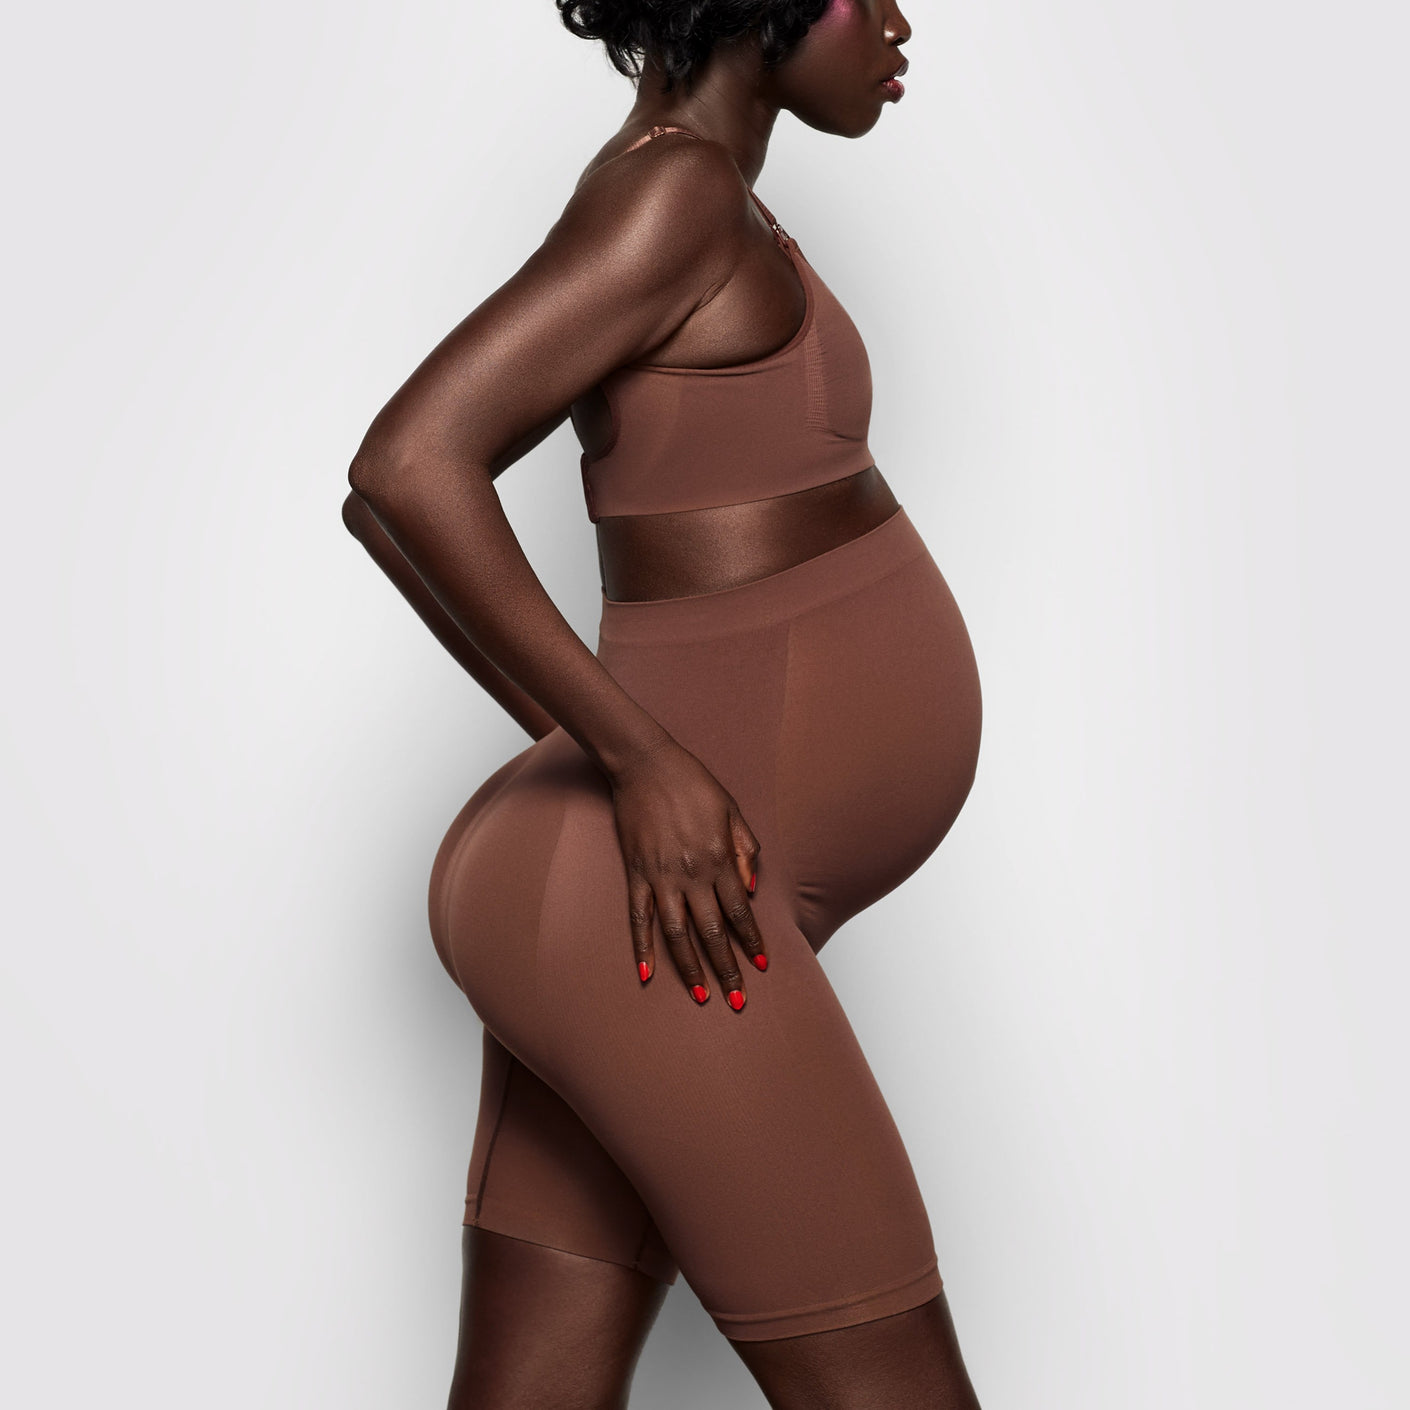 Pregnant Bodysuit - Pregnancy Body Shaper & Maternity Shapewear